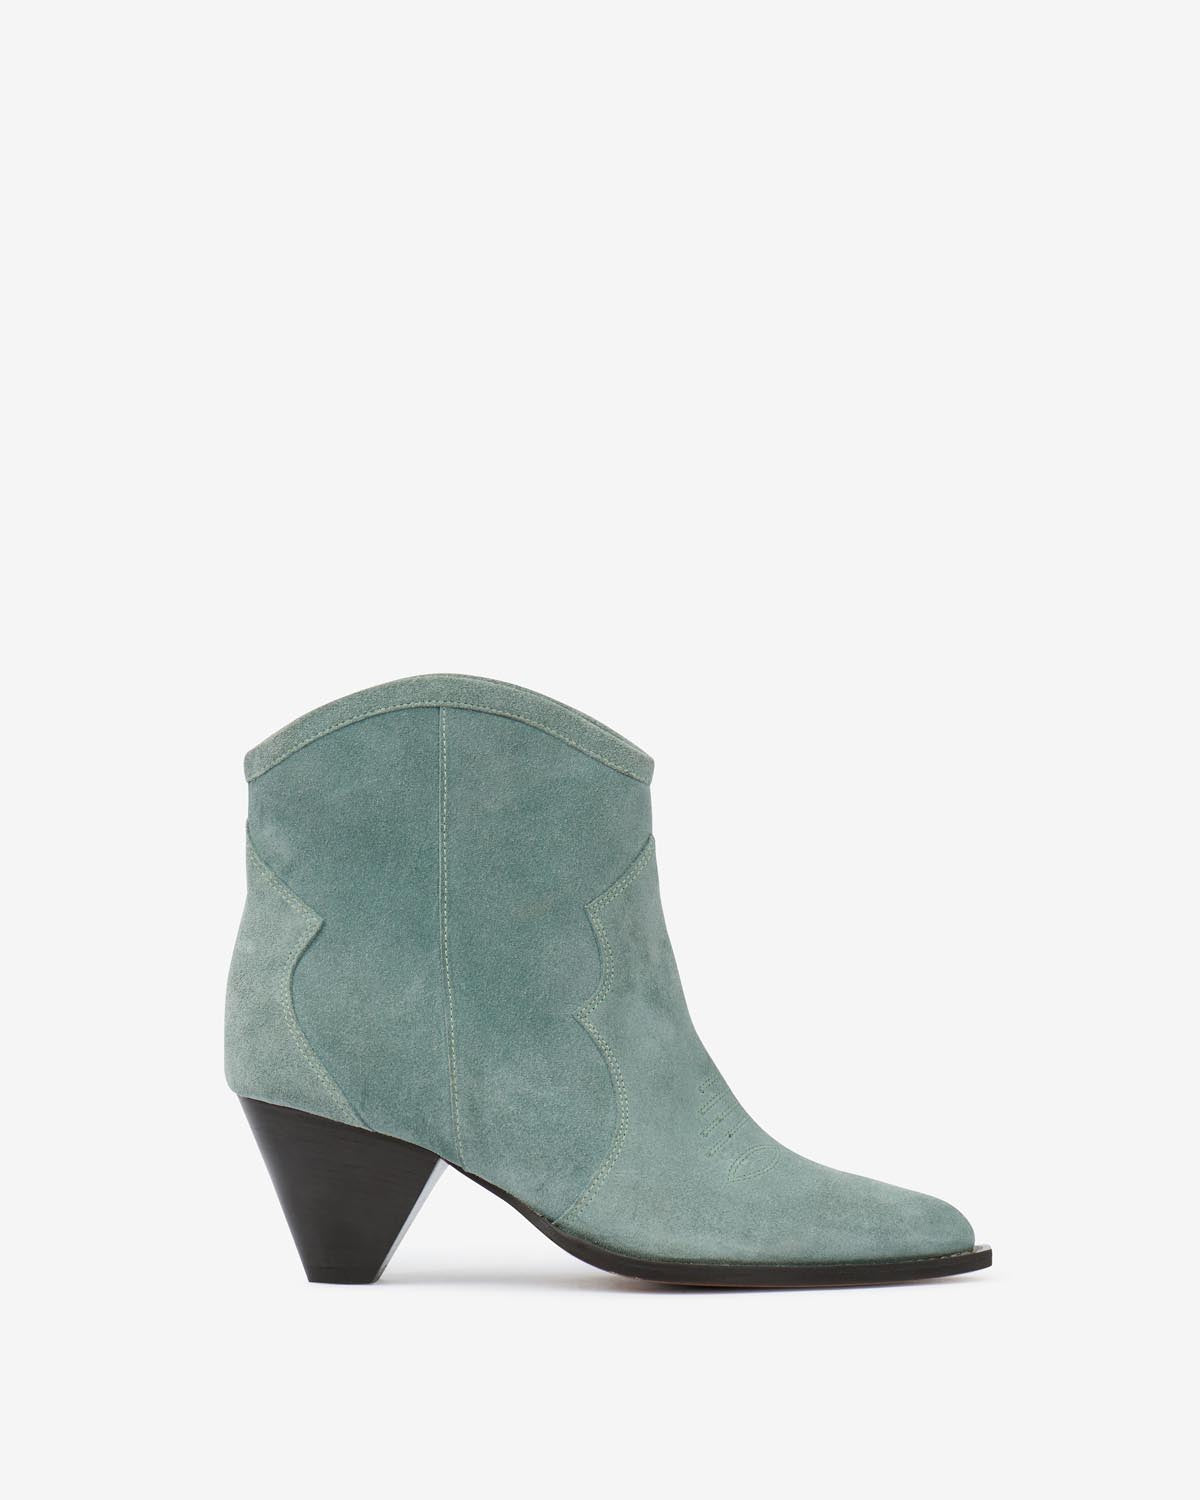 Boots darizo Woman Sea vert 1